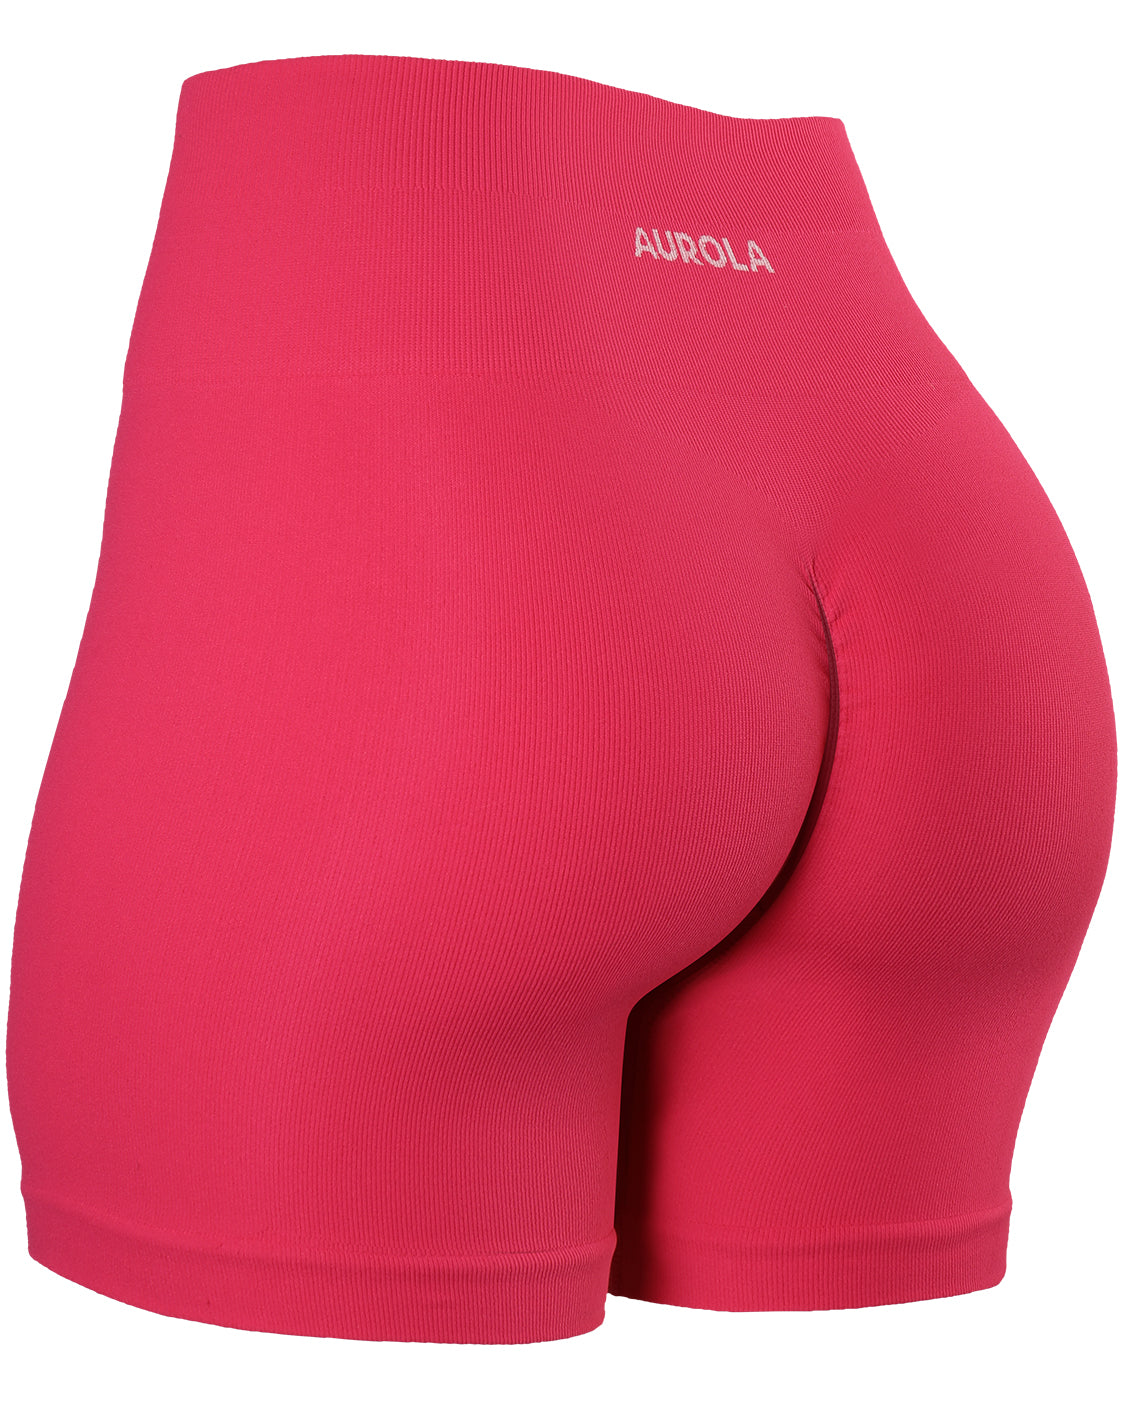 NECHOLOGY Womens Shorts Aurola Workout Shorts Women's Juniors Denim Shorts  High Waisted Frayed Raw Hem Tassels Short Pants Jeans 